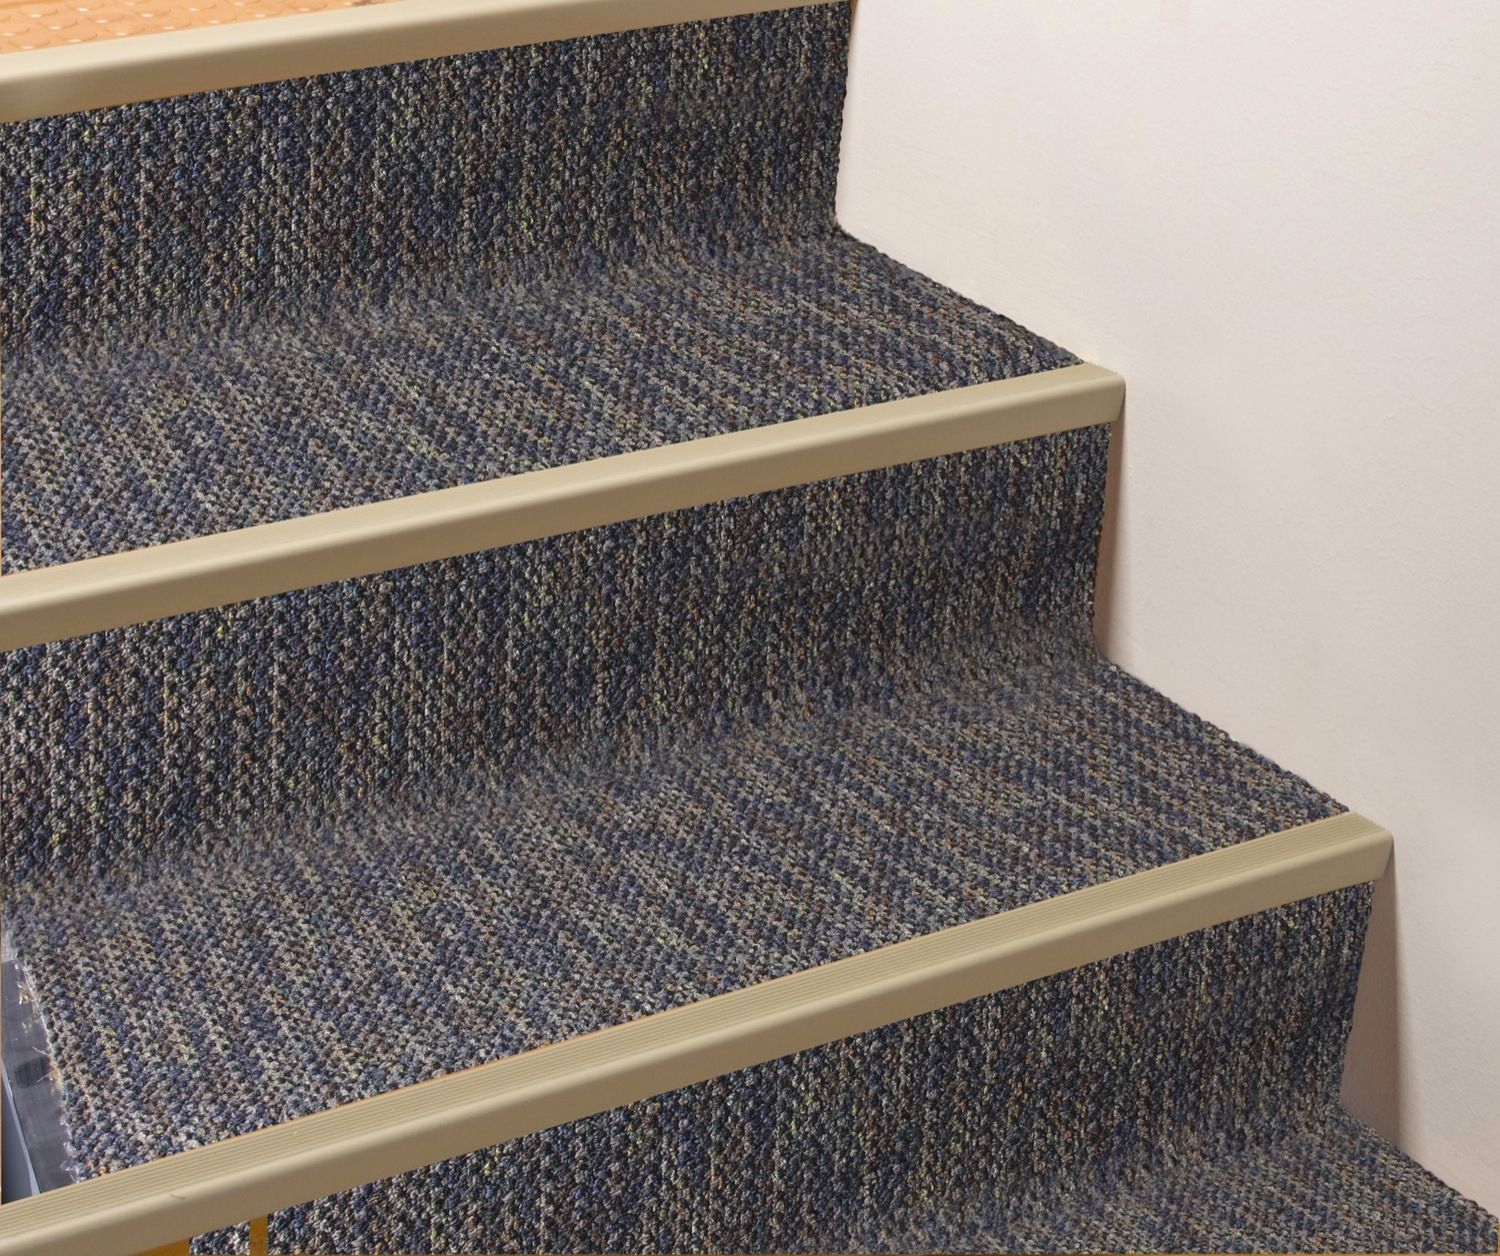 Flexco Rubber Flooring Vinyl Flooring Vinyl Accessories Samples Inside Adhesive Carpet Strips For Stairs (View 13 of 15)